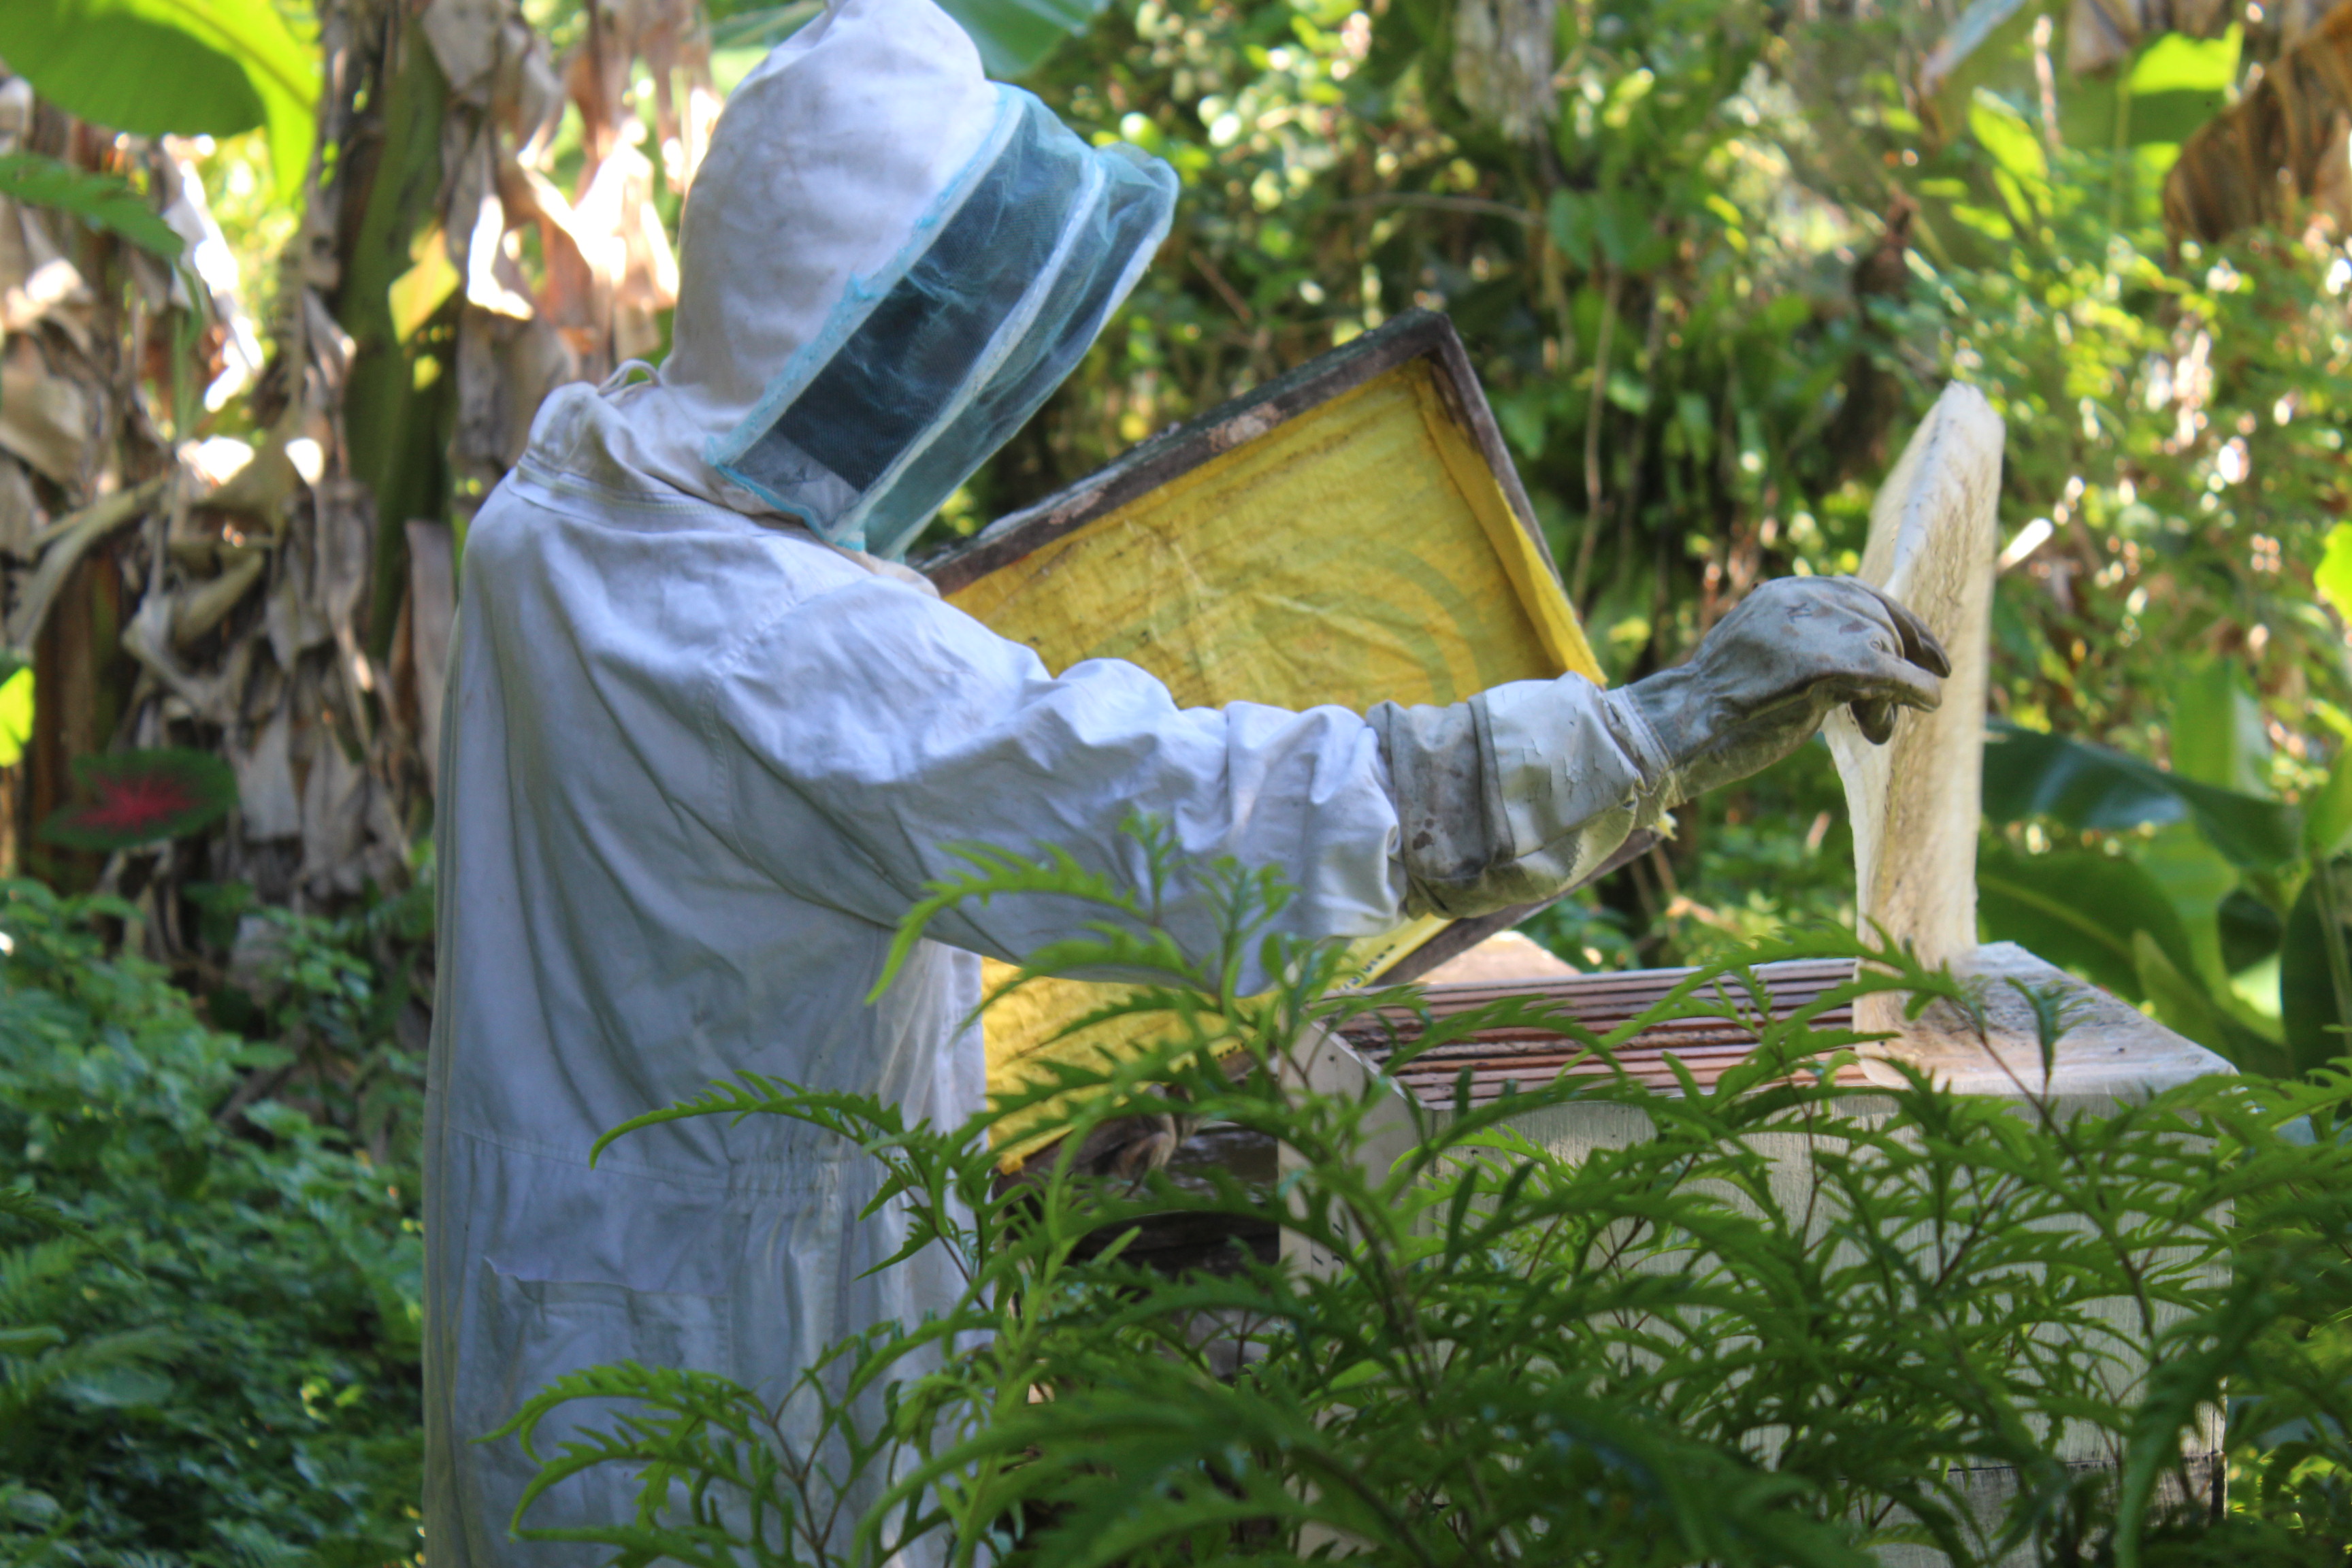 David Suda Honey farmer in Uatae